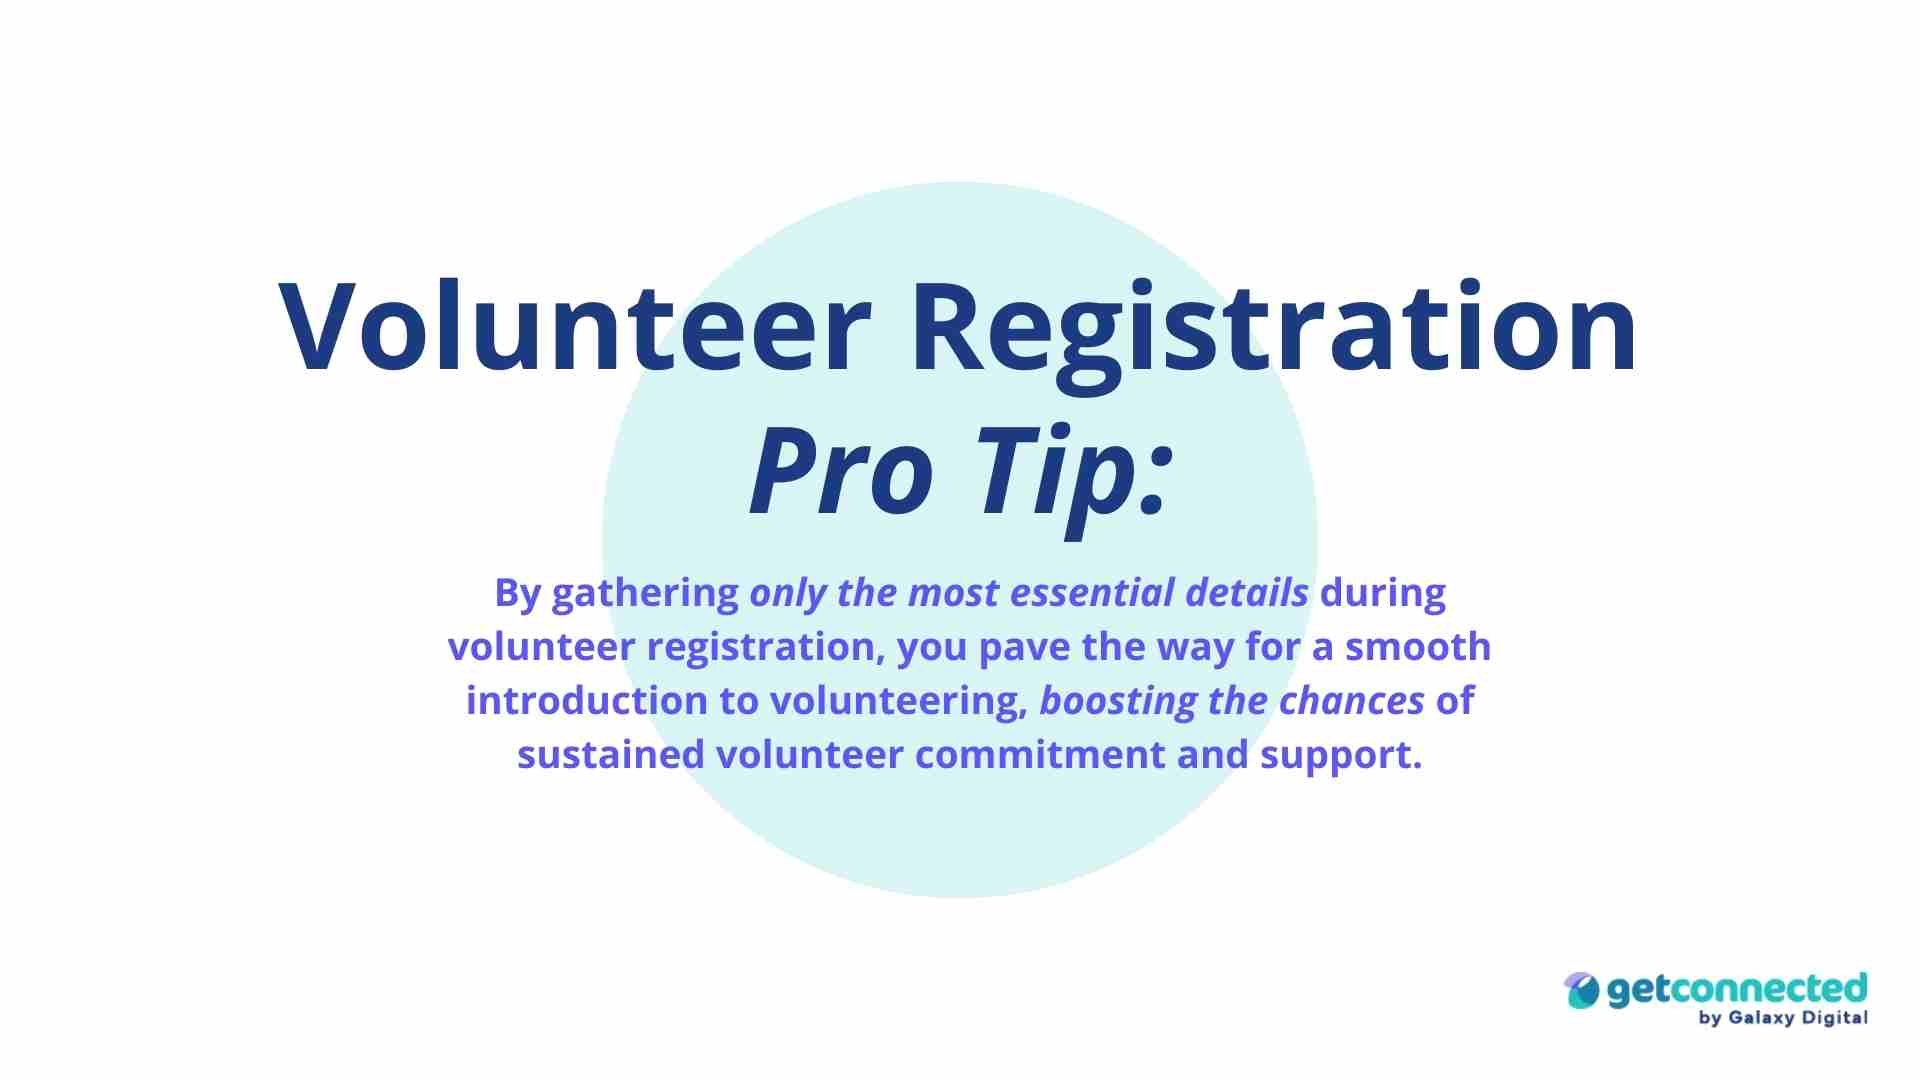 Volunteer Registration Pro Tip